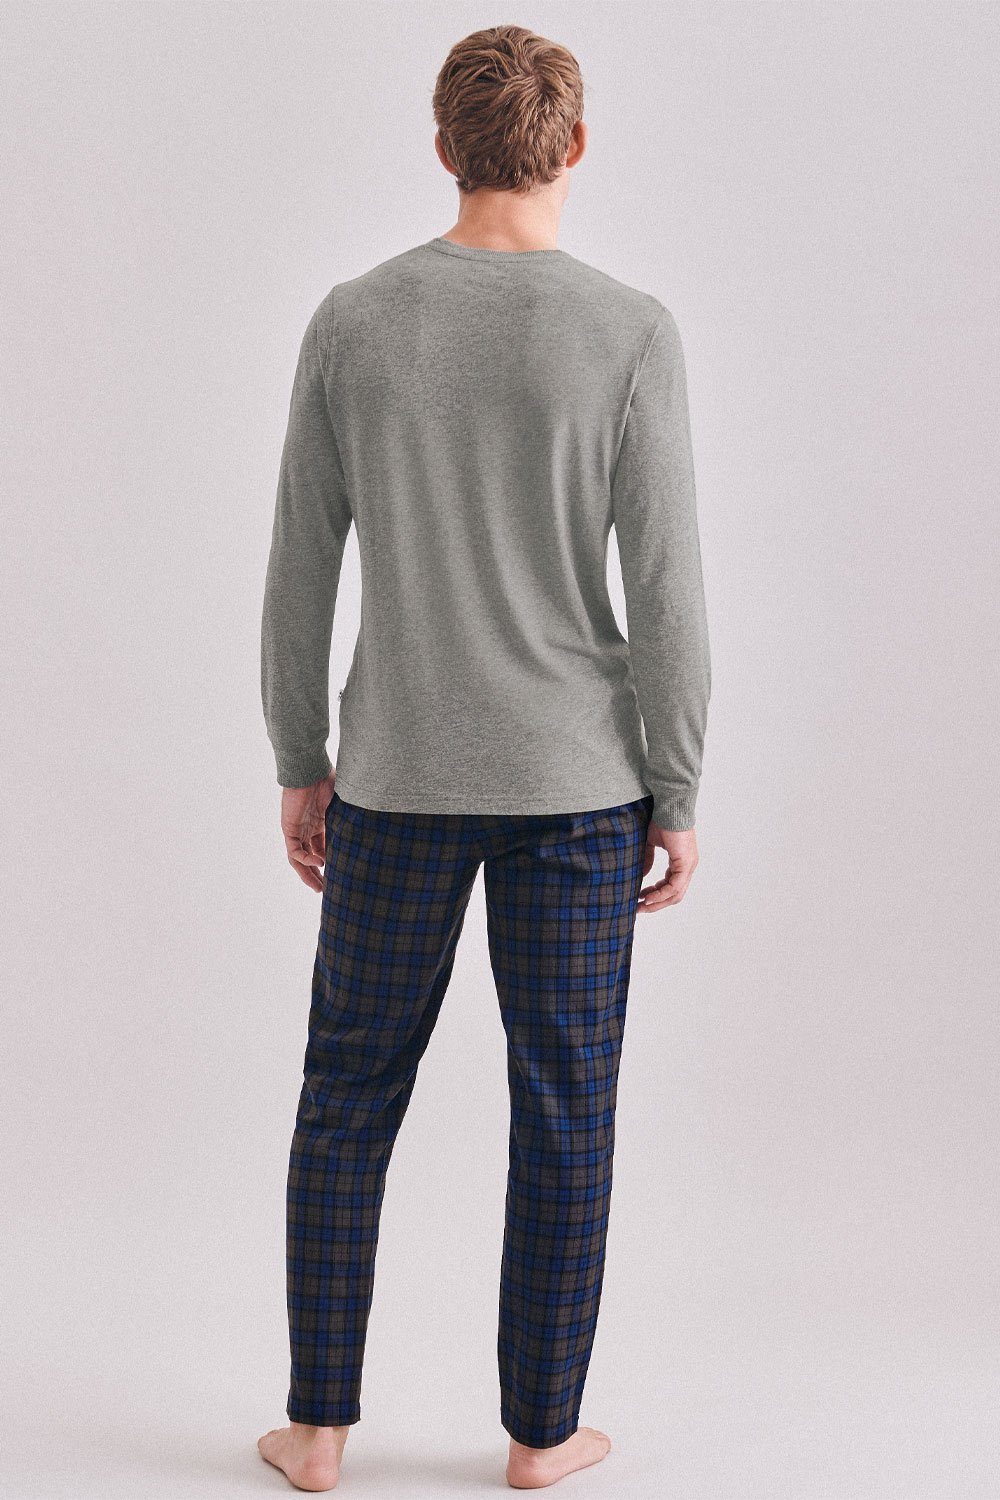 100006 grey/navy olive check Mix seidensticker Pyjama & Match Pyjama